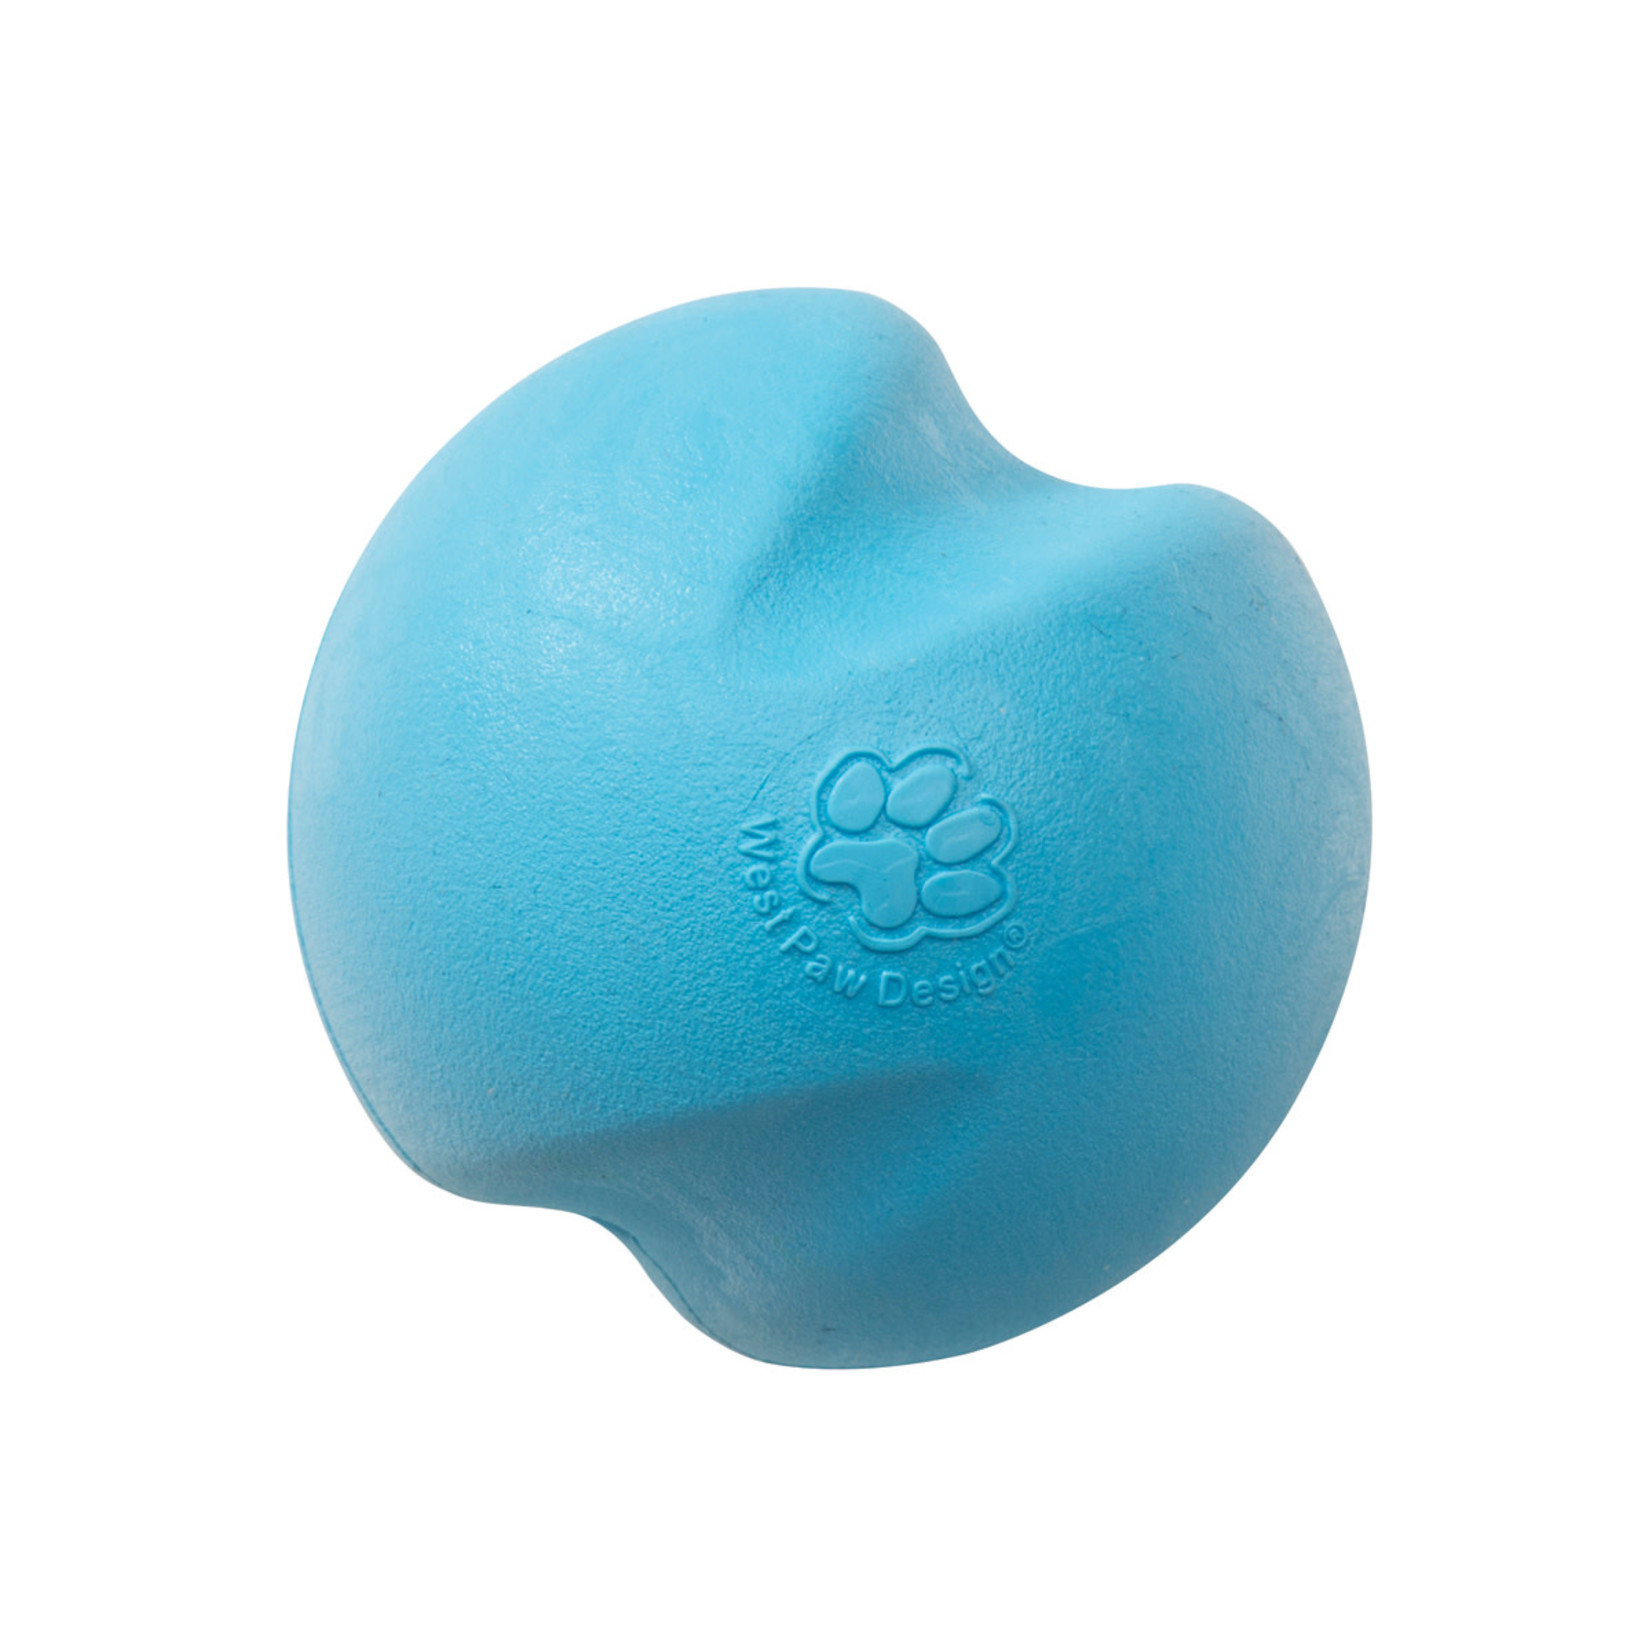 Jive Small ball 2.5" - Aqua Blue dog toy